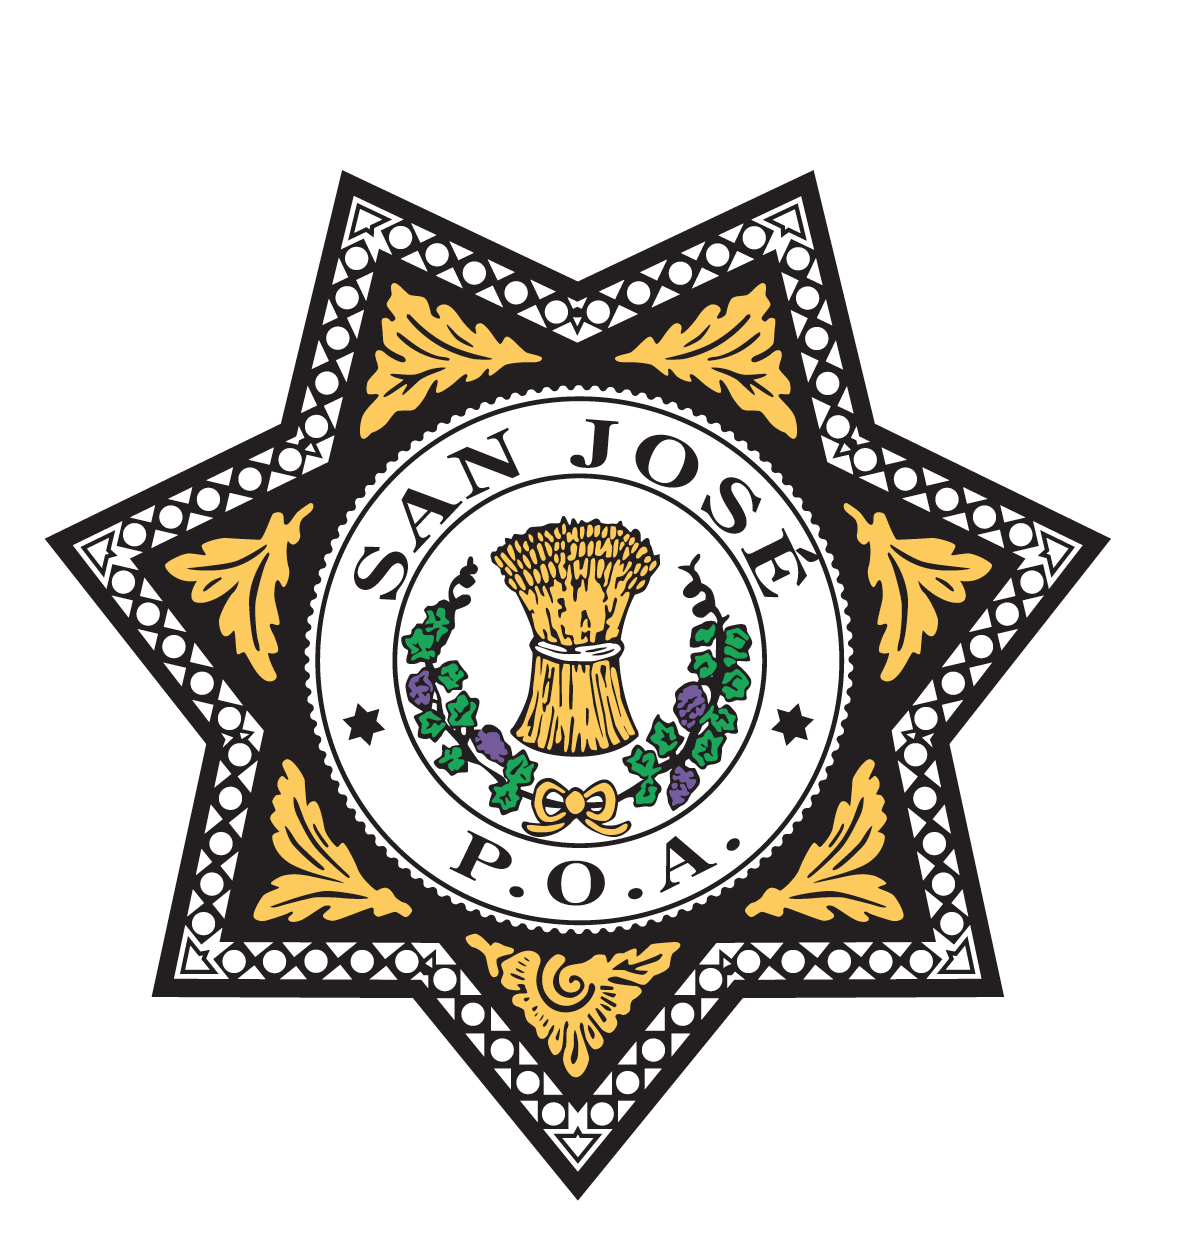 San Jose Police Officer's Association